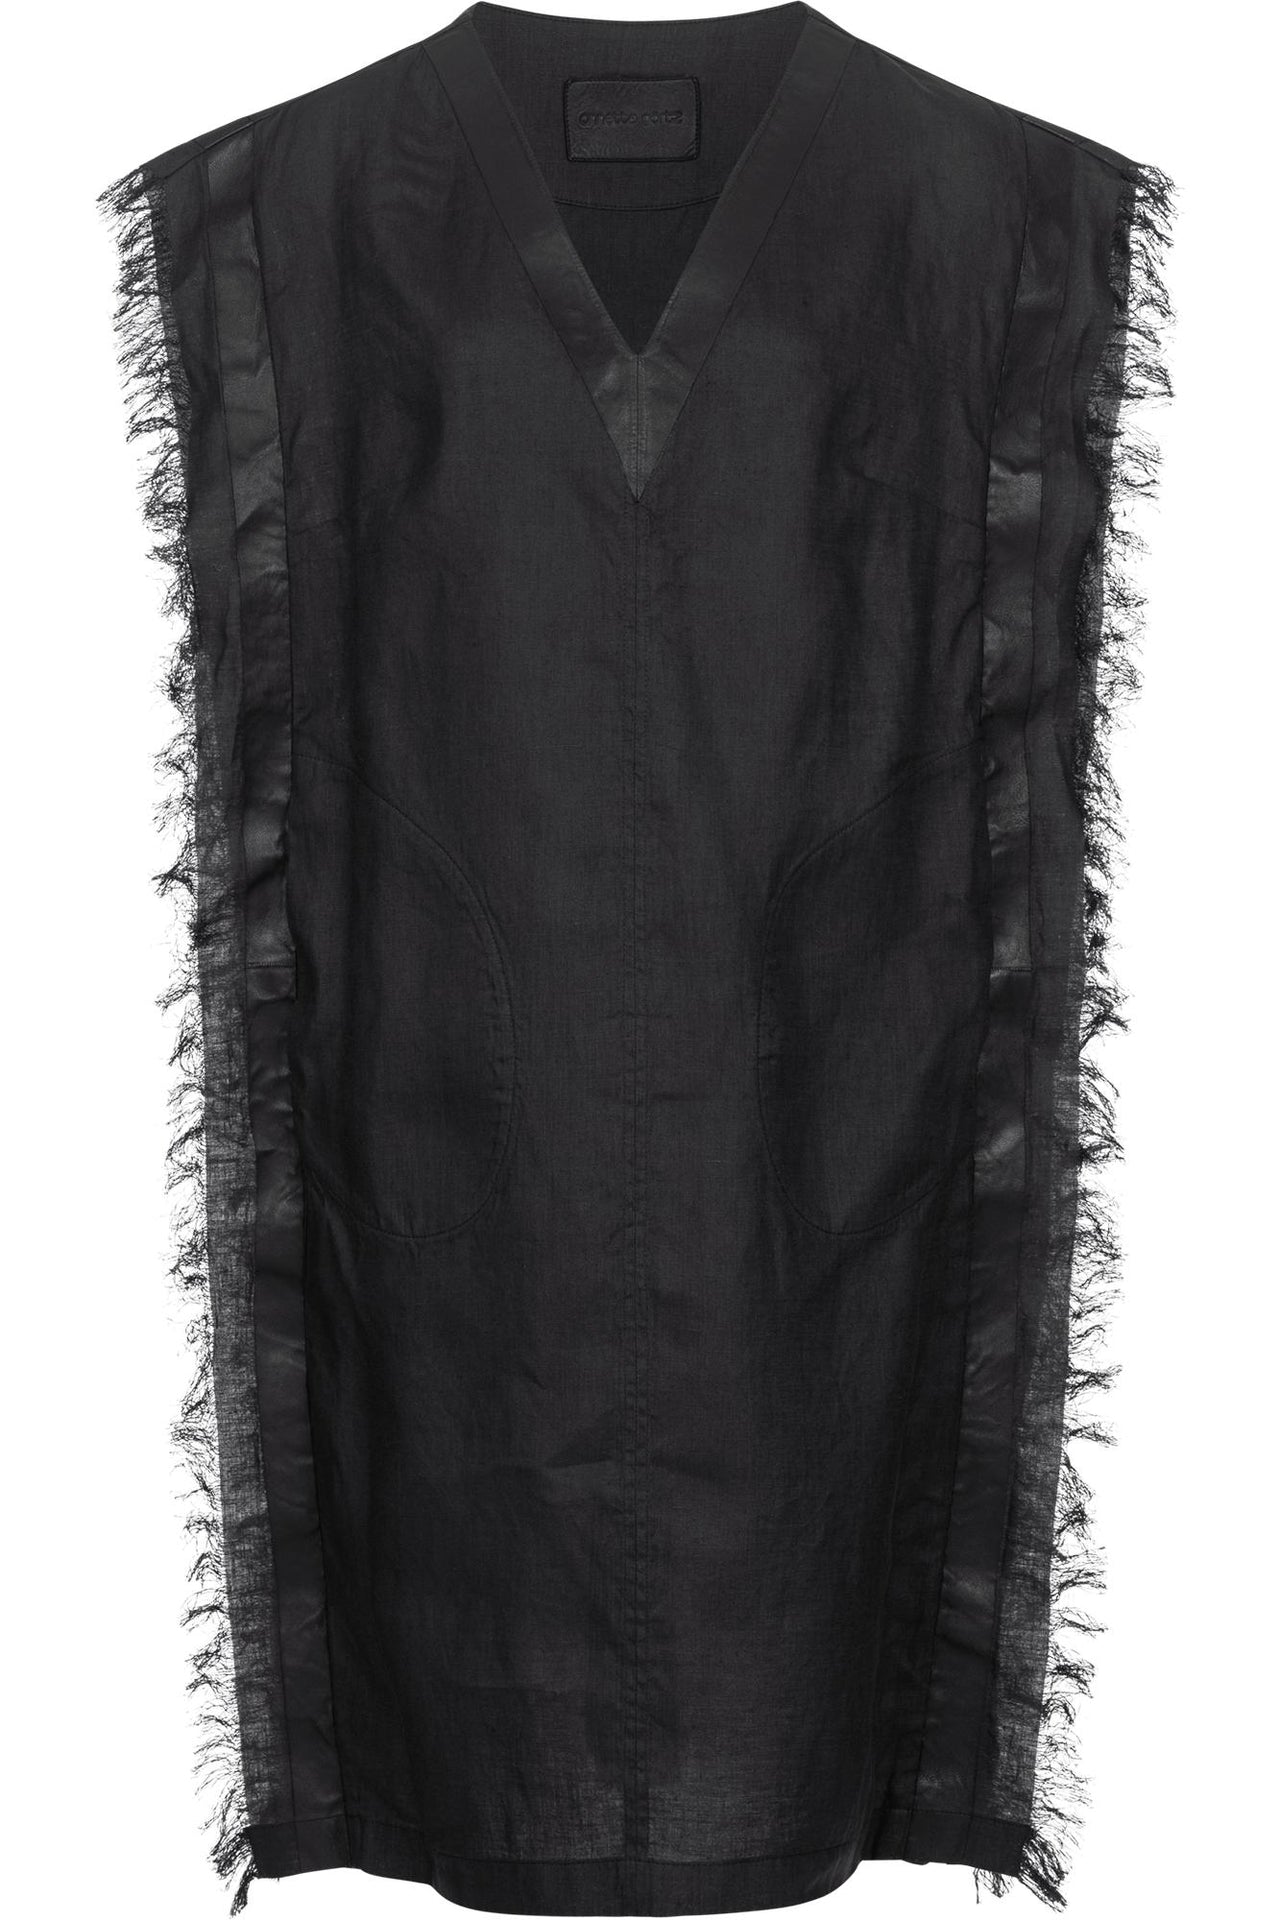 Luni Leather Dress-Dress-Annette Gortz-Debs Boutique